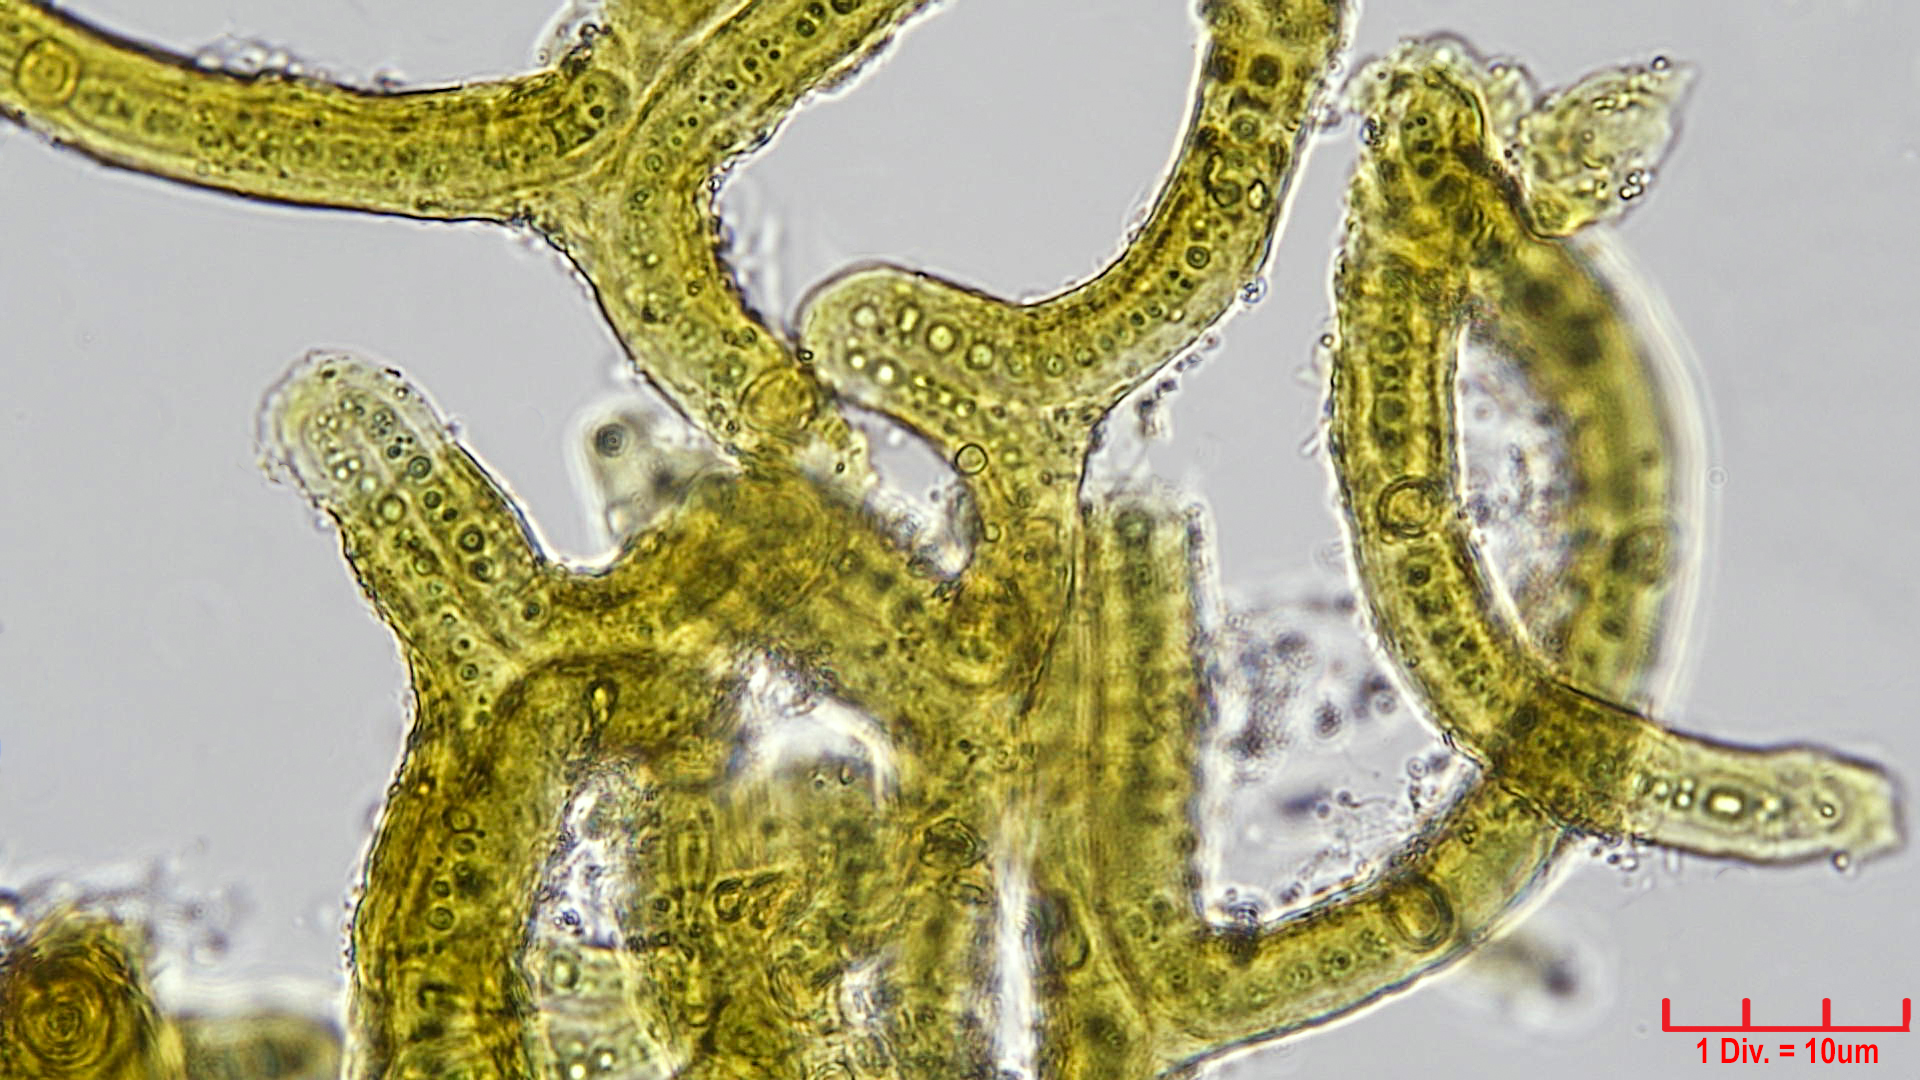 ././././Cyanobacteria/Nostocales/Scytonemataceae/Petalonema/incrustans/petalonema-incrustans-417.jpg